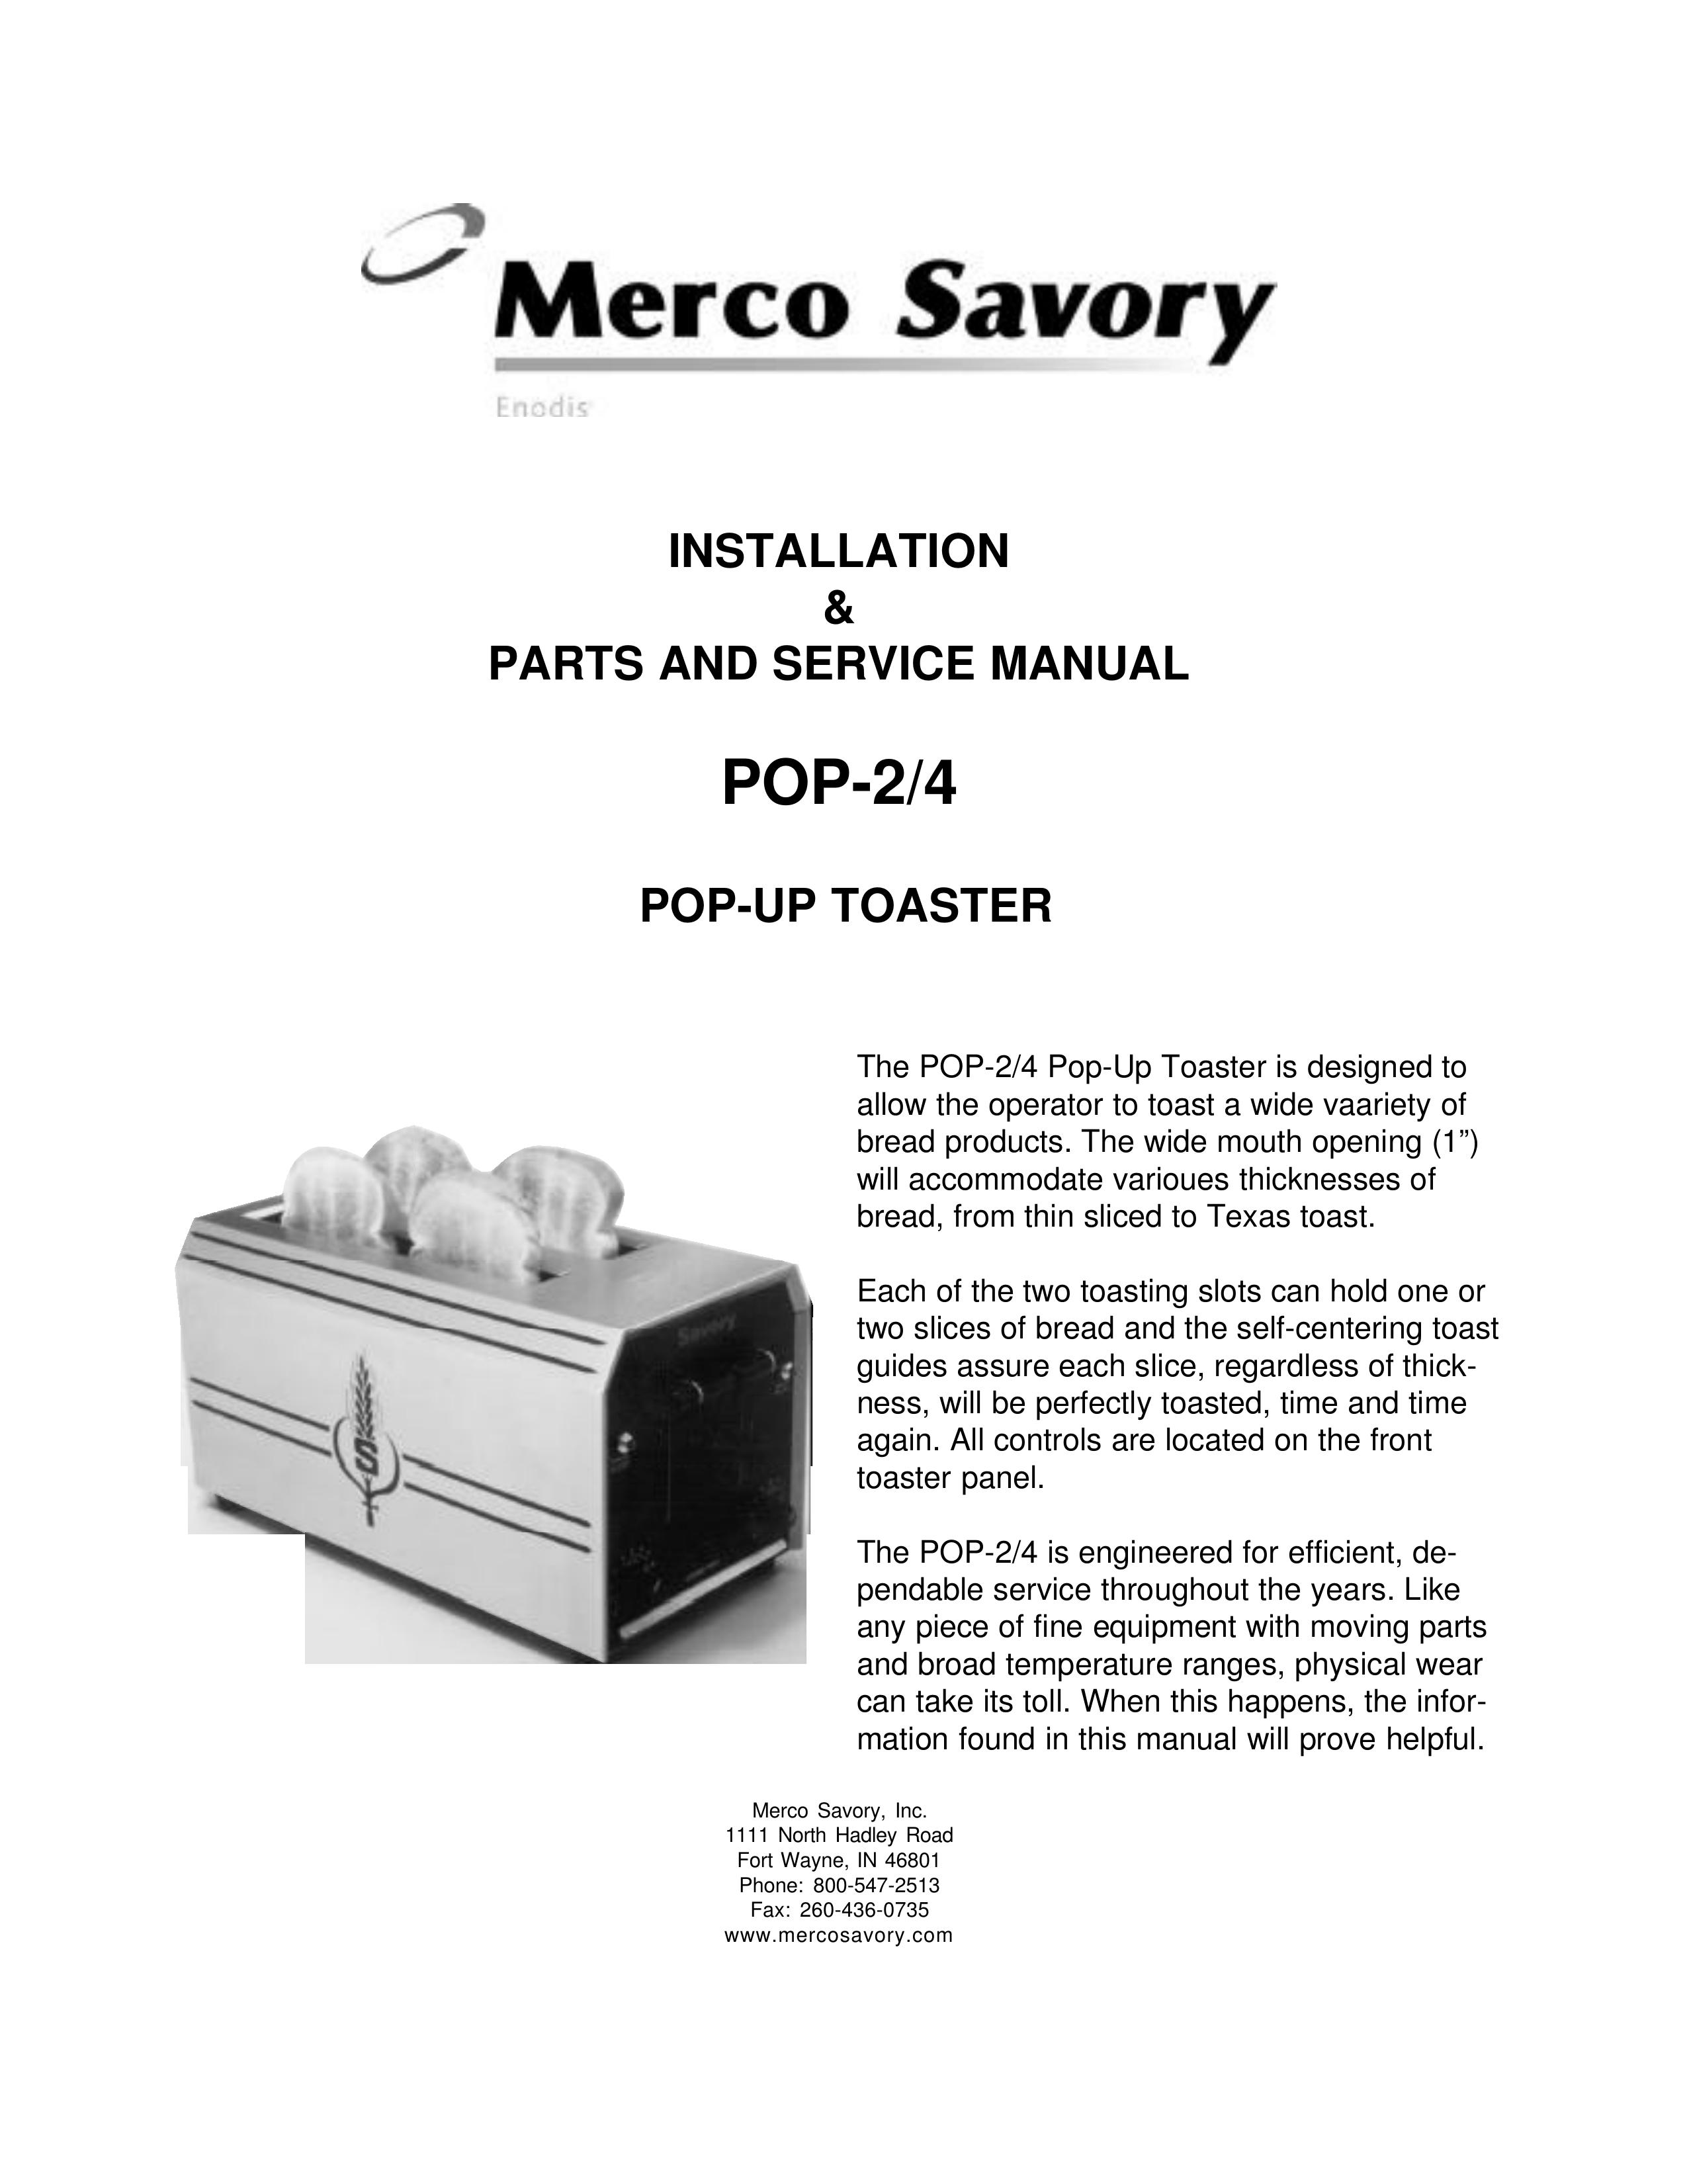 Merco Savory POP-2/4 Toaster User Manual